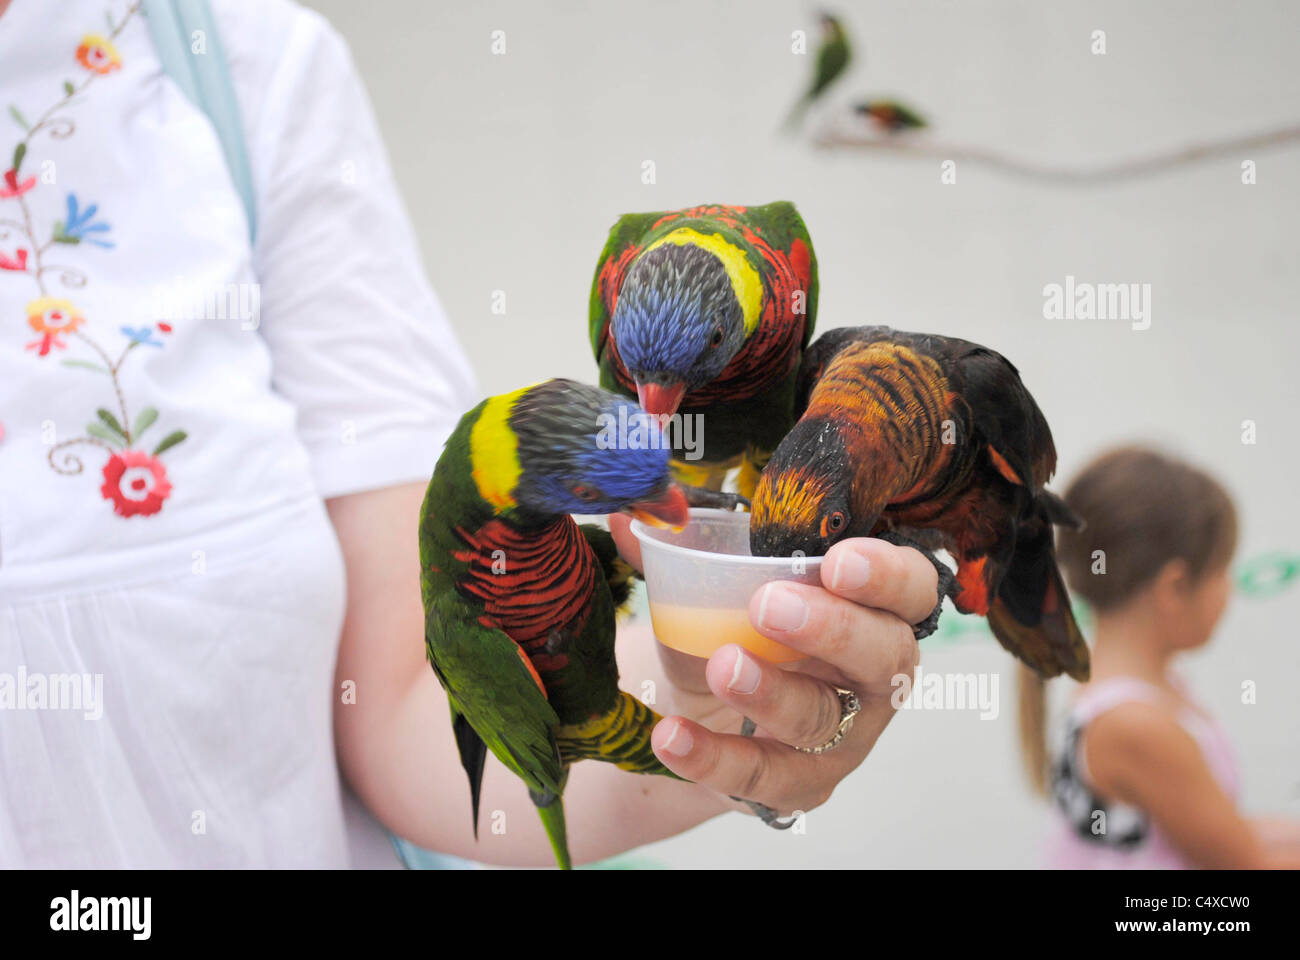 Parrots feeding by hand Stock Photo